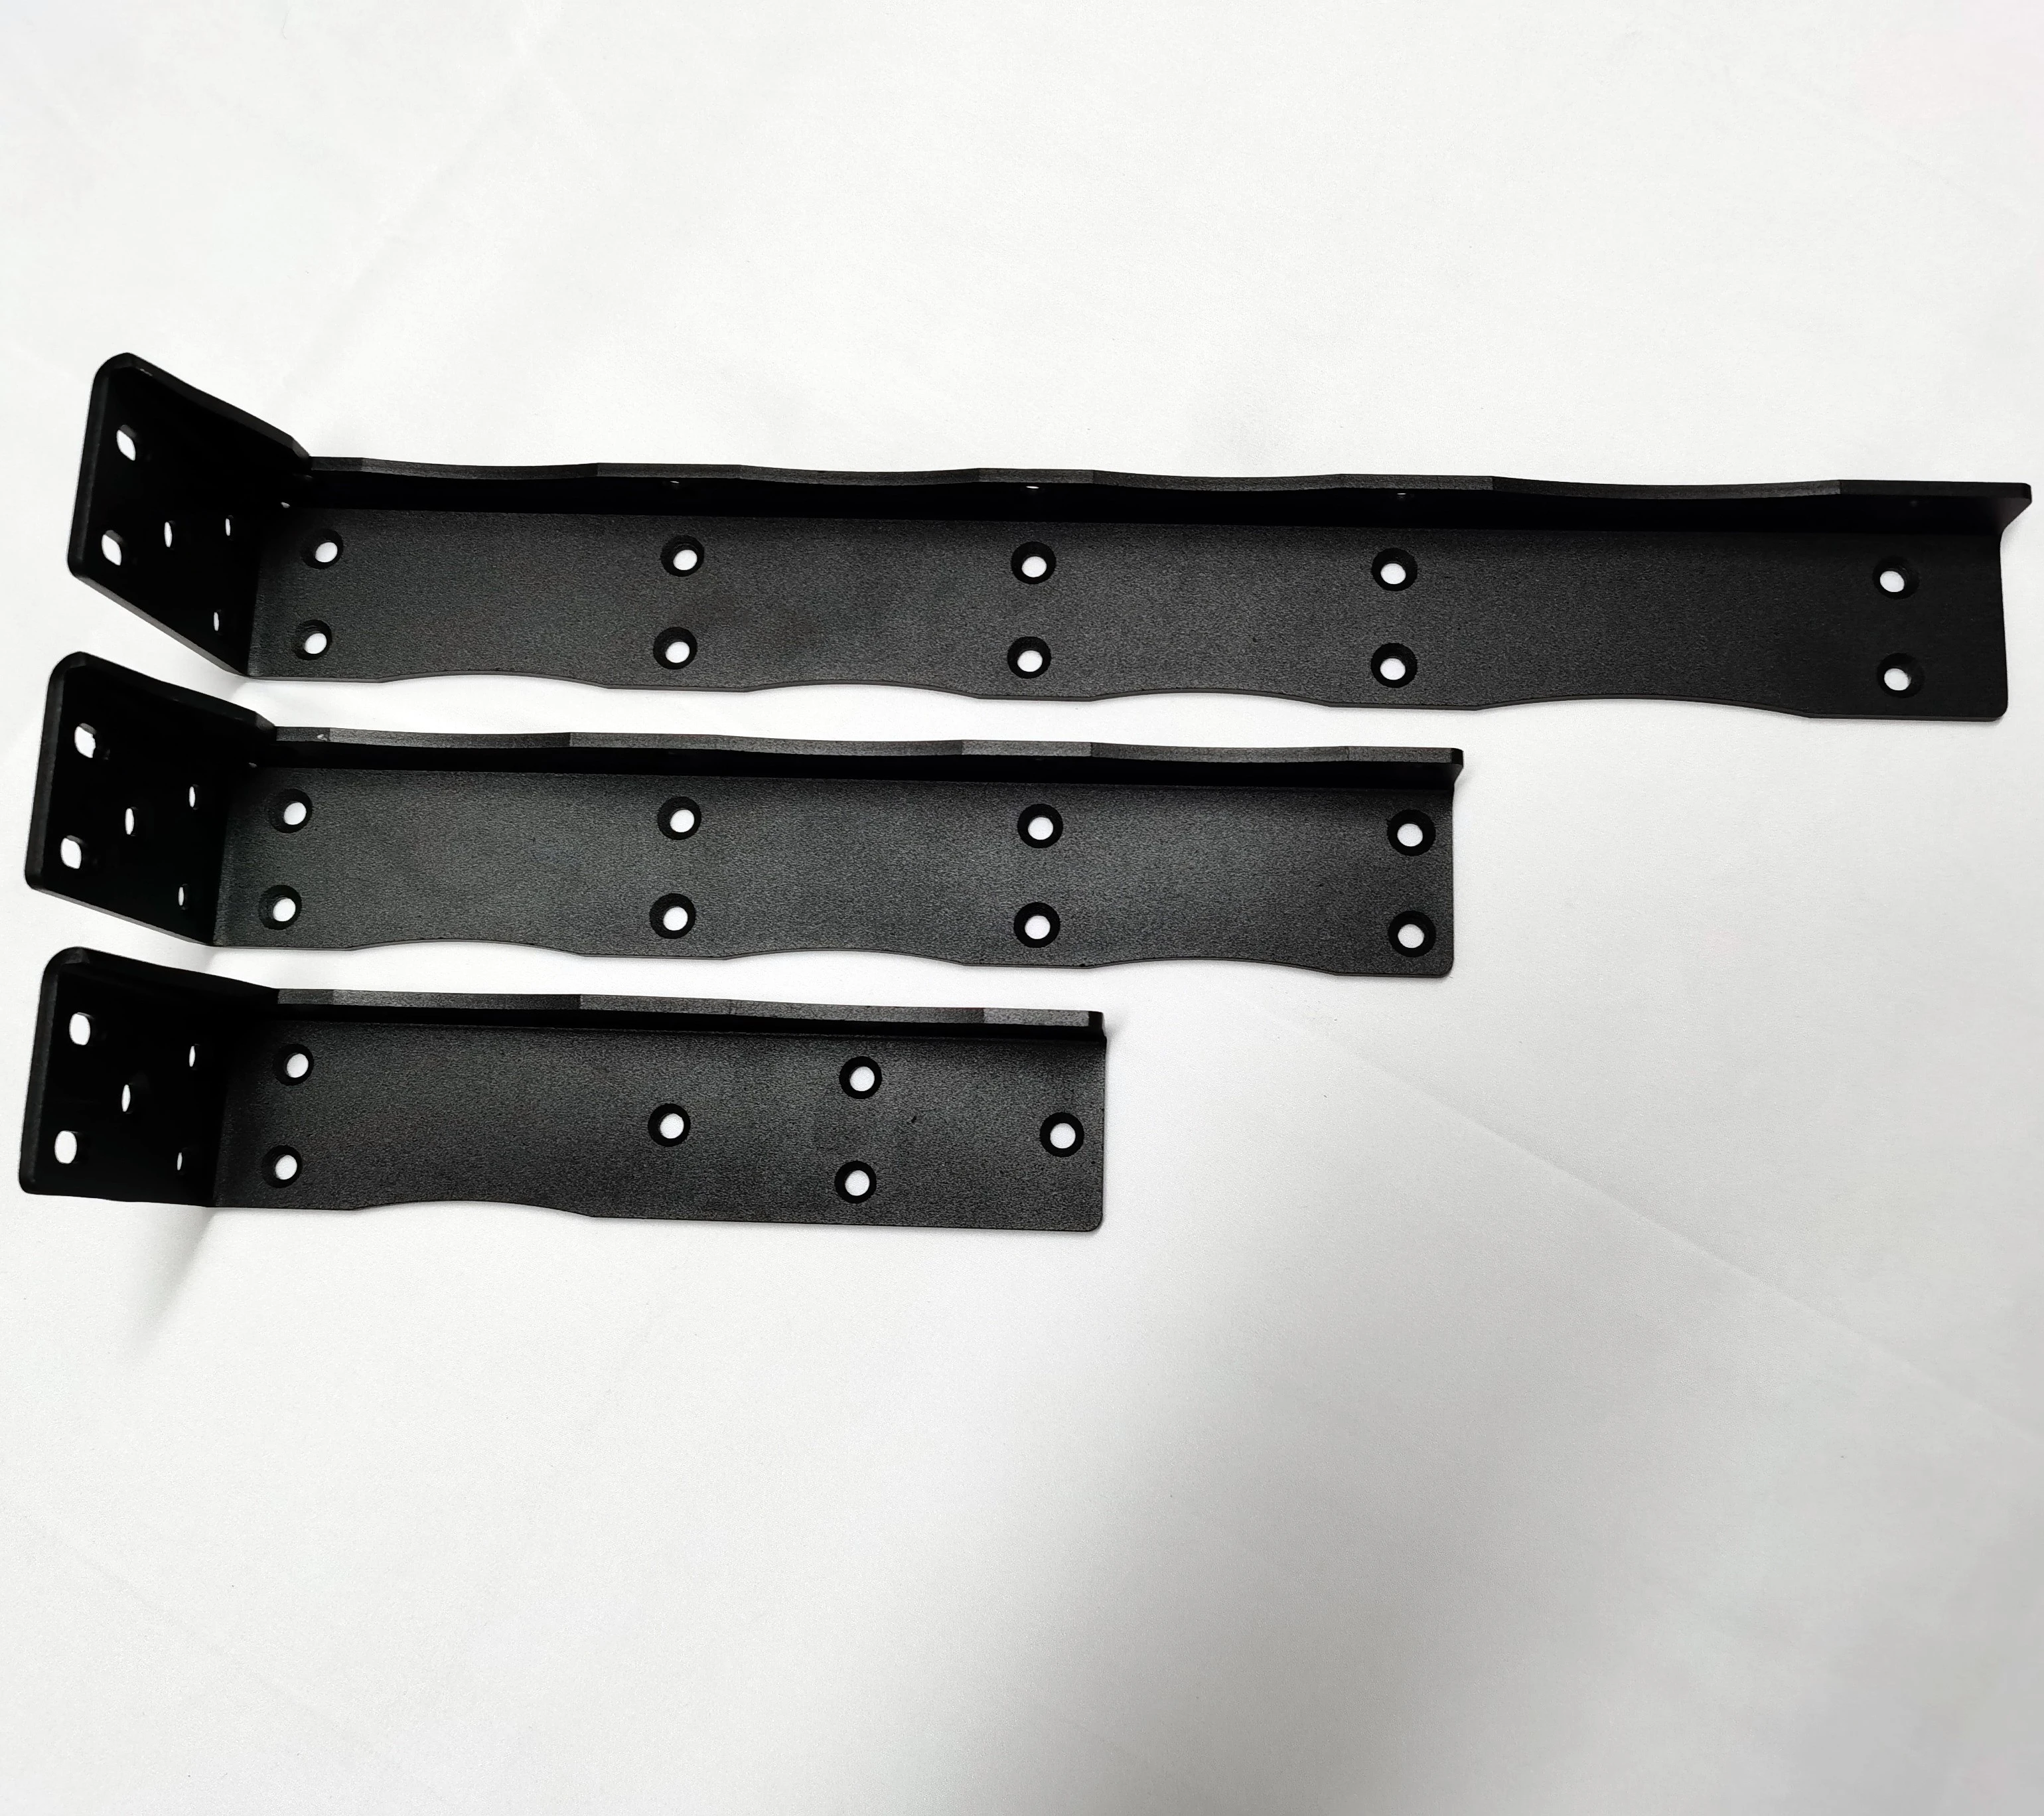 Black Steel Shelf Bracket for Wood Shelving - Buy black steel shelf bracket, black metal brackets, black metal wall brackets Product on Surealong